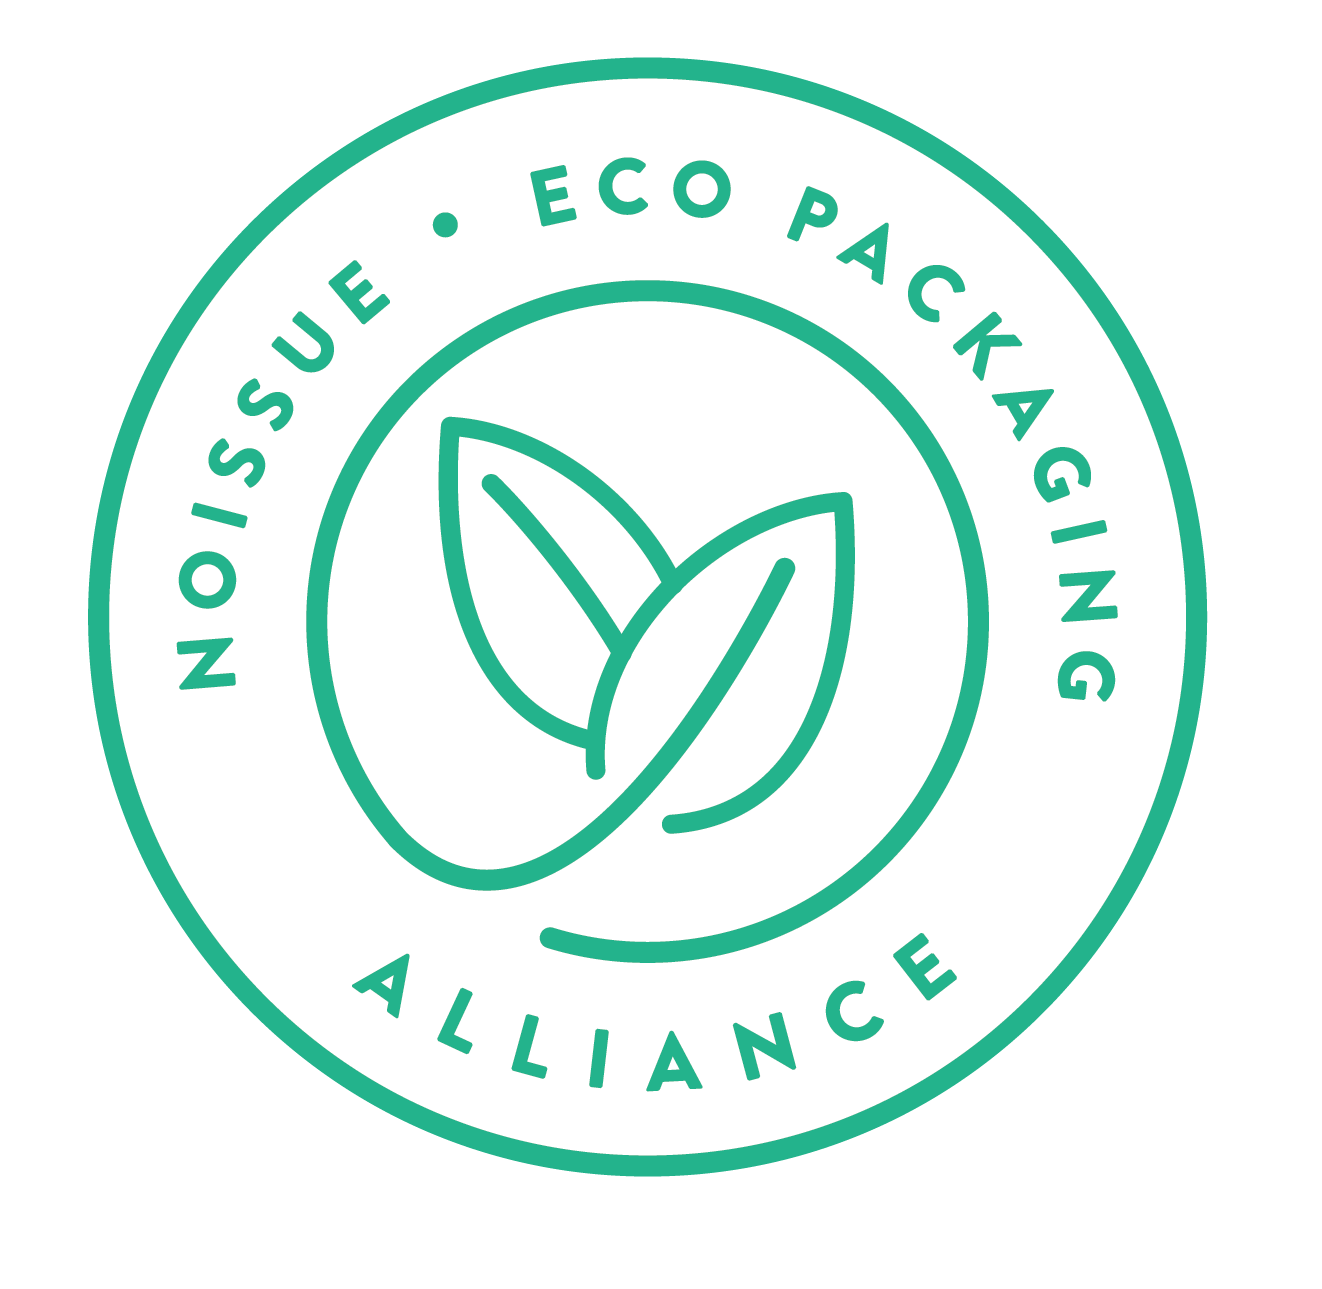 Eco packaging